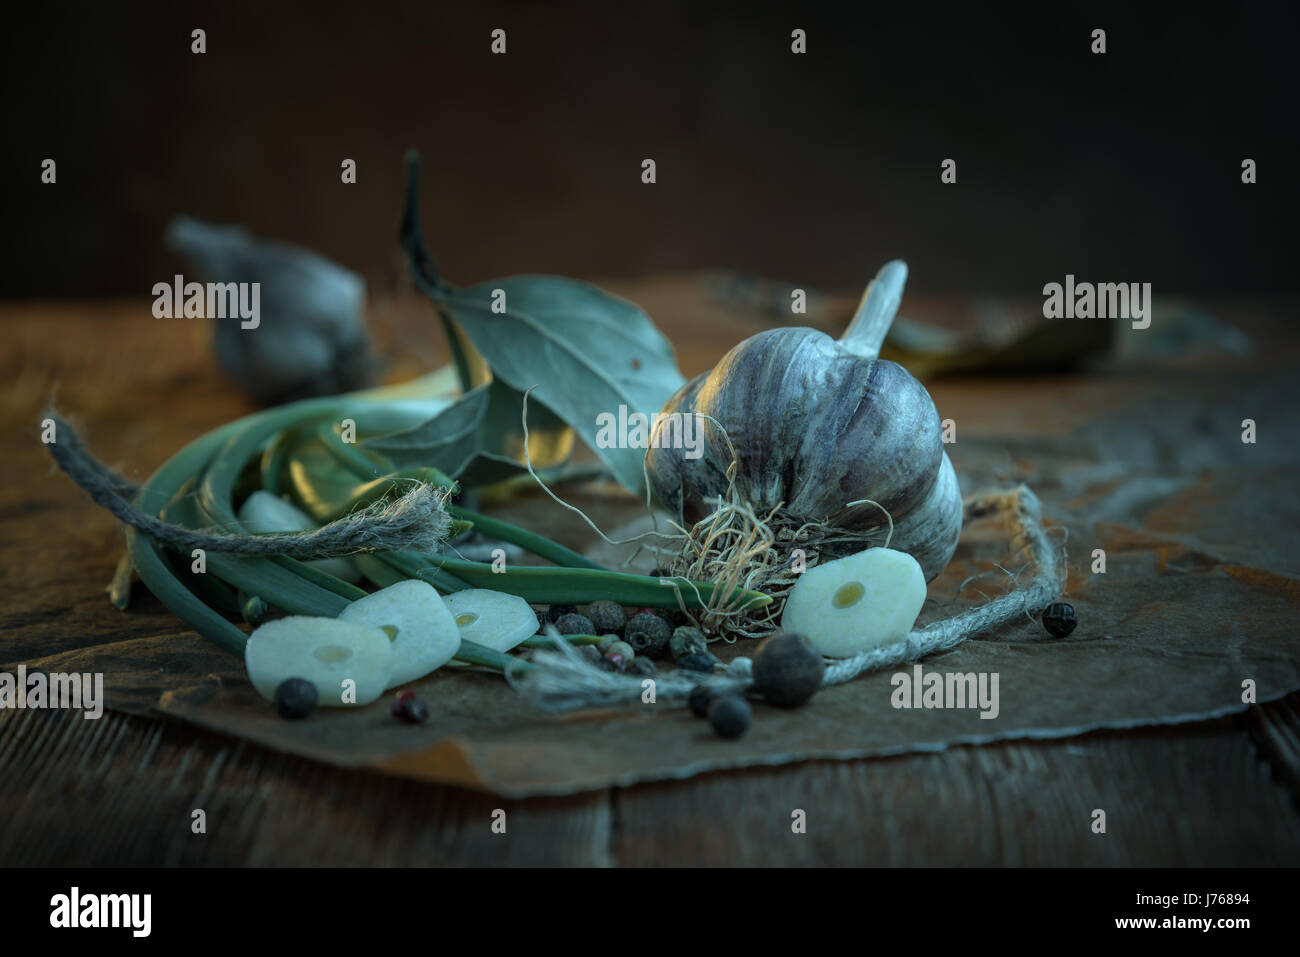 Head garlic, garlic cloves, Bay leaves on a wooden Board on a dark background Stock Photo